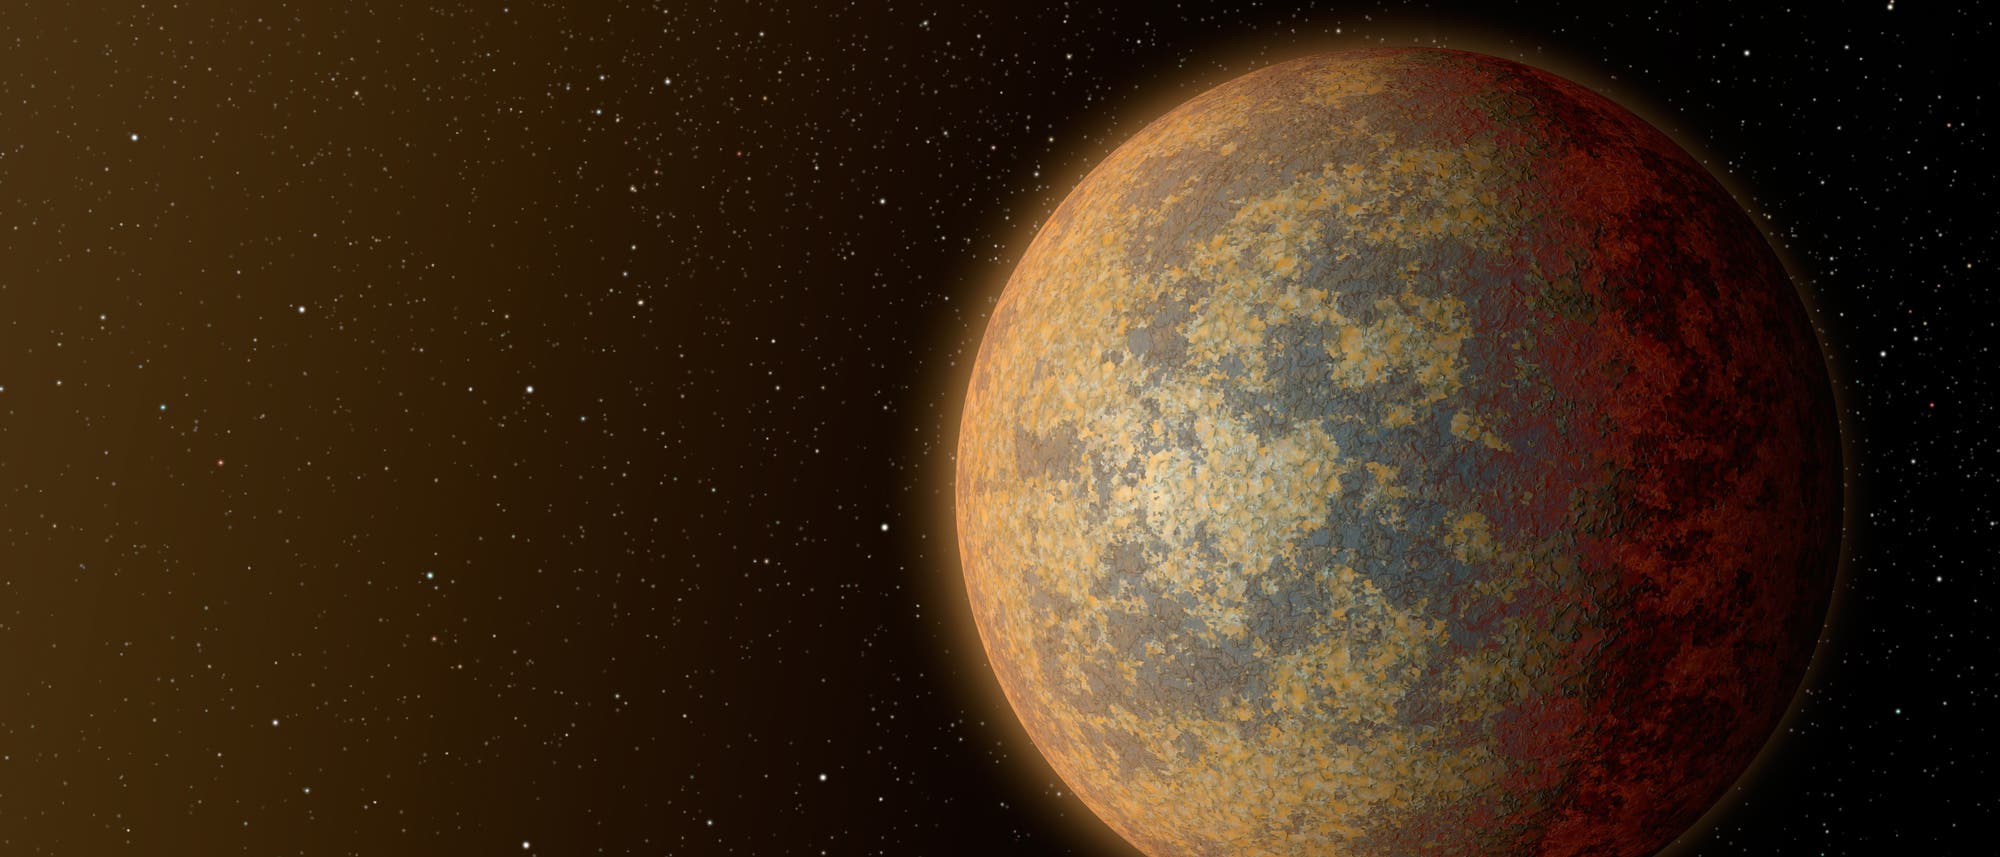 Exoplanet HD 219134b (künstl. Darstellung)